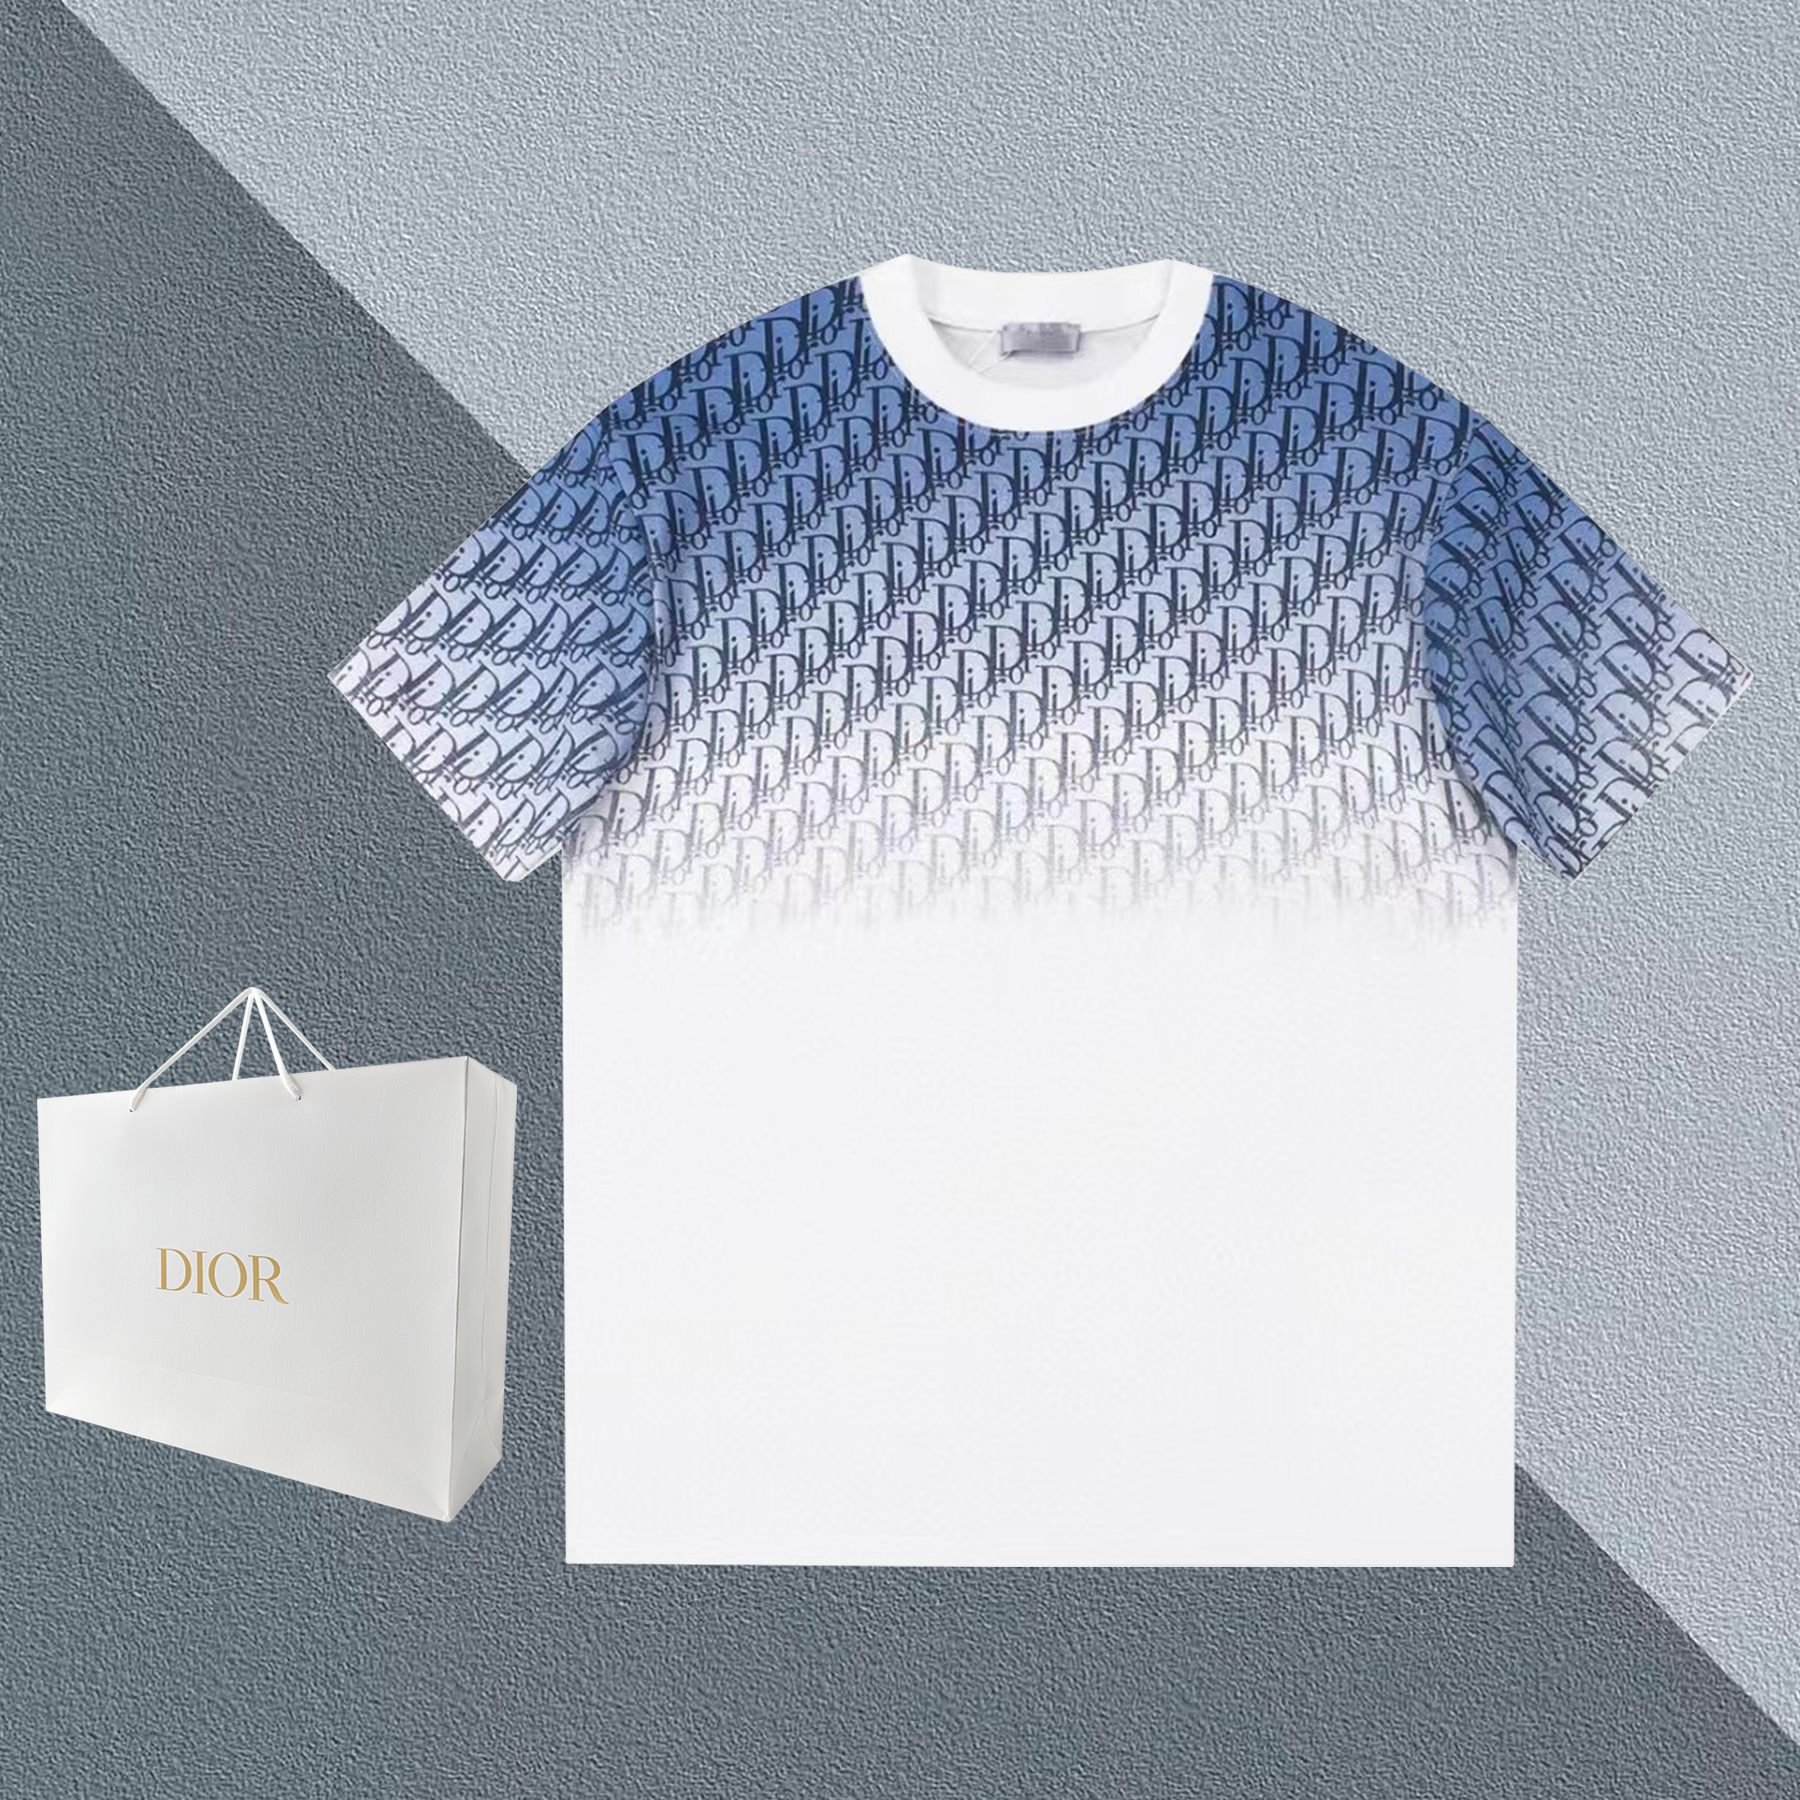 Dior Clothing T-Shirt Blue Grey White Unisex Cotton Knitting Summer Collection Fashion Short Sleeve